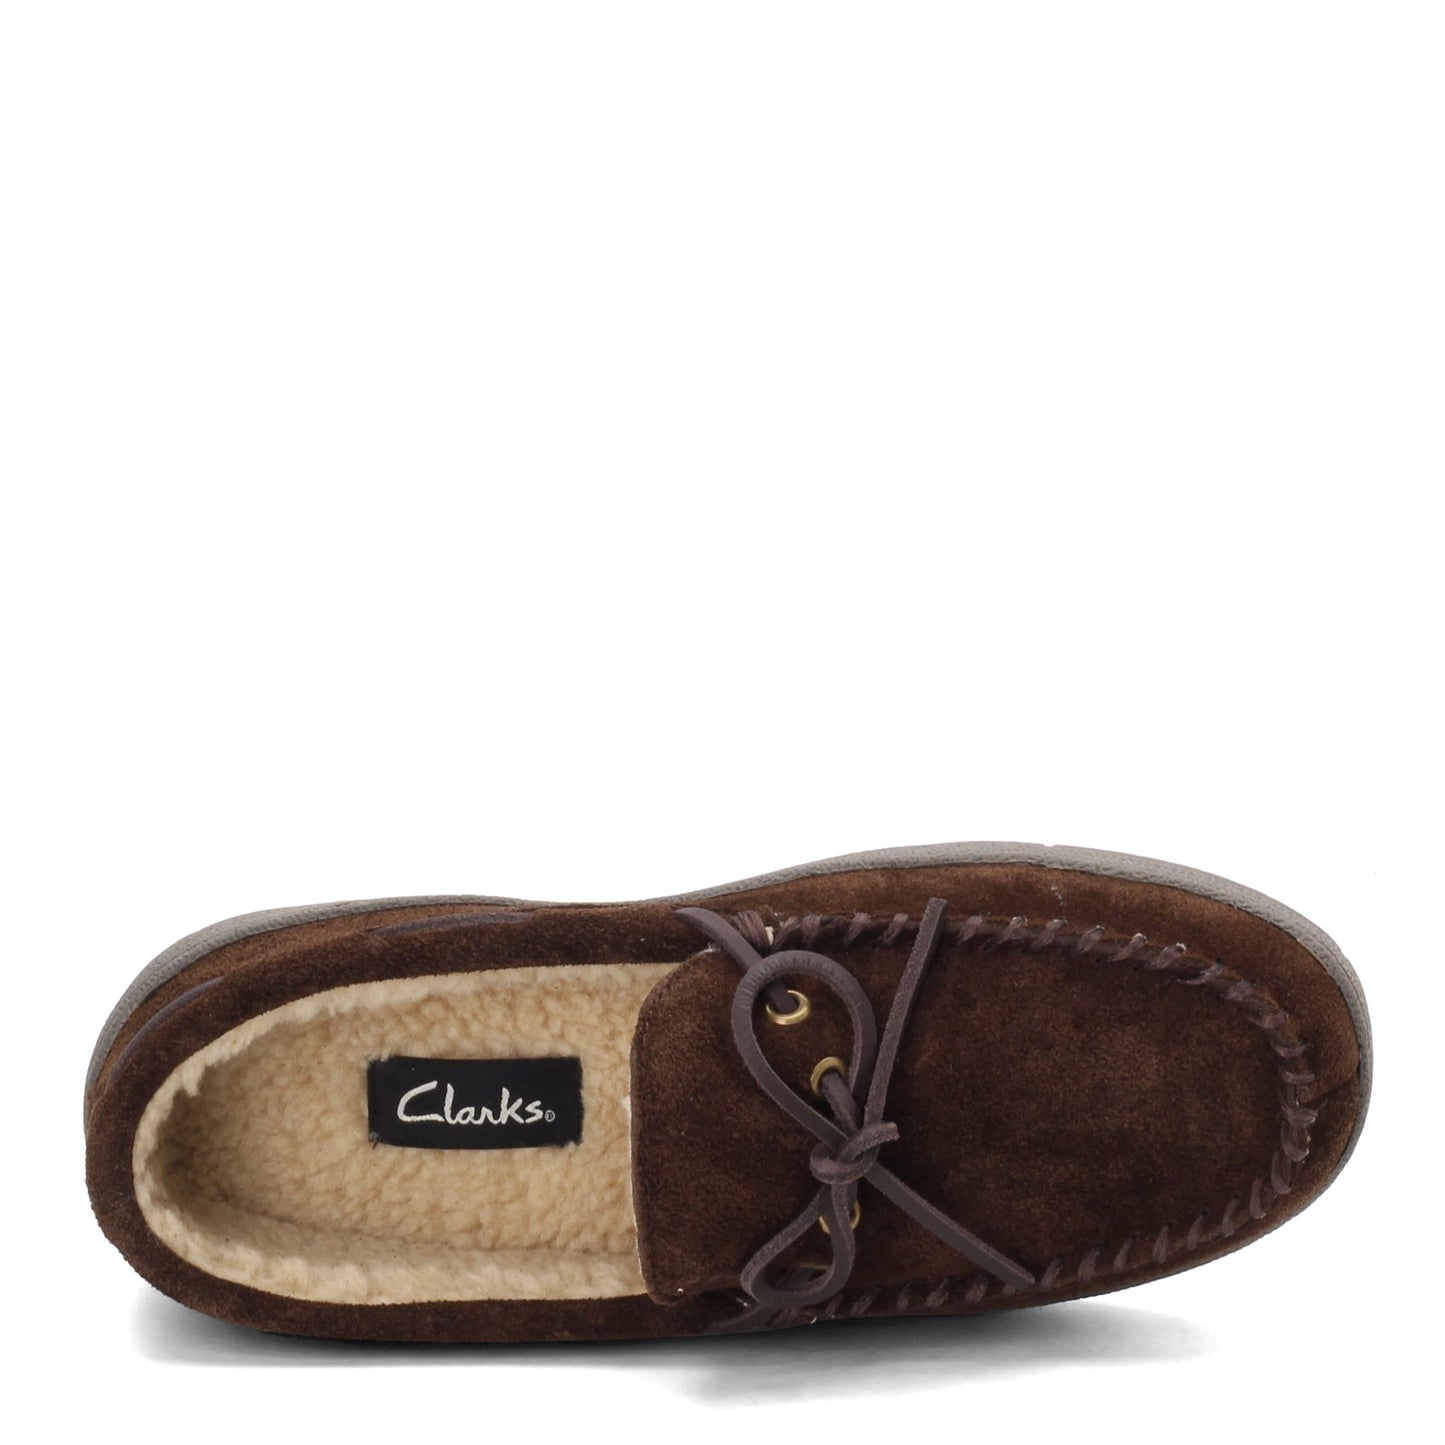 Peltz Shoes  Men's Clarks Moccasin Slipper DARK BROWN 22SH-011-SIM DB